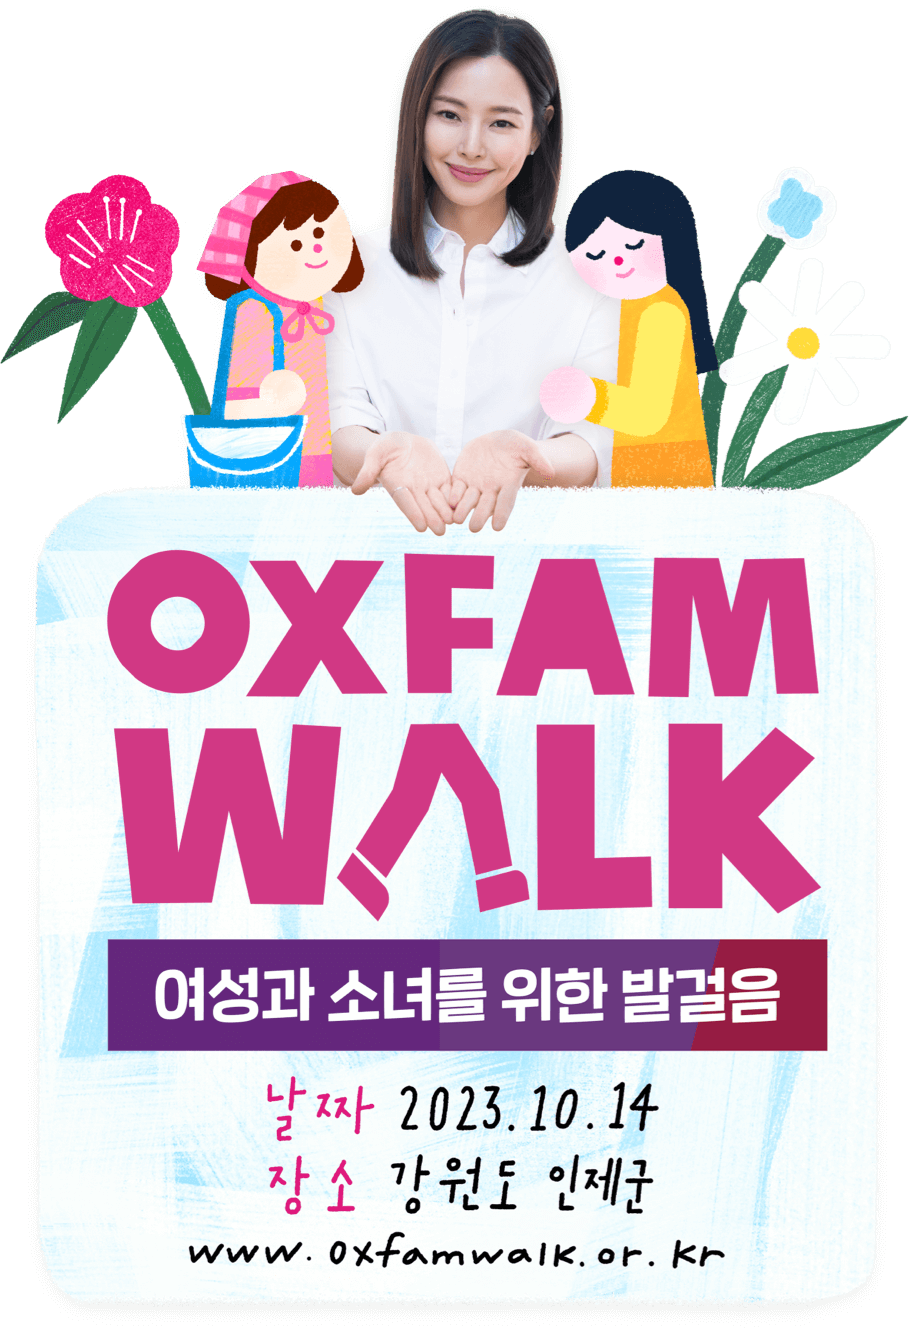 OXFAM WALK 여성과 소녀를 위한 발걸음. 날짜 2023.10.14. 장소 강원도 인제군. www.oxfamwalk.or.kr 